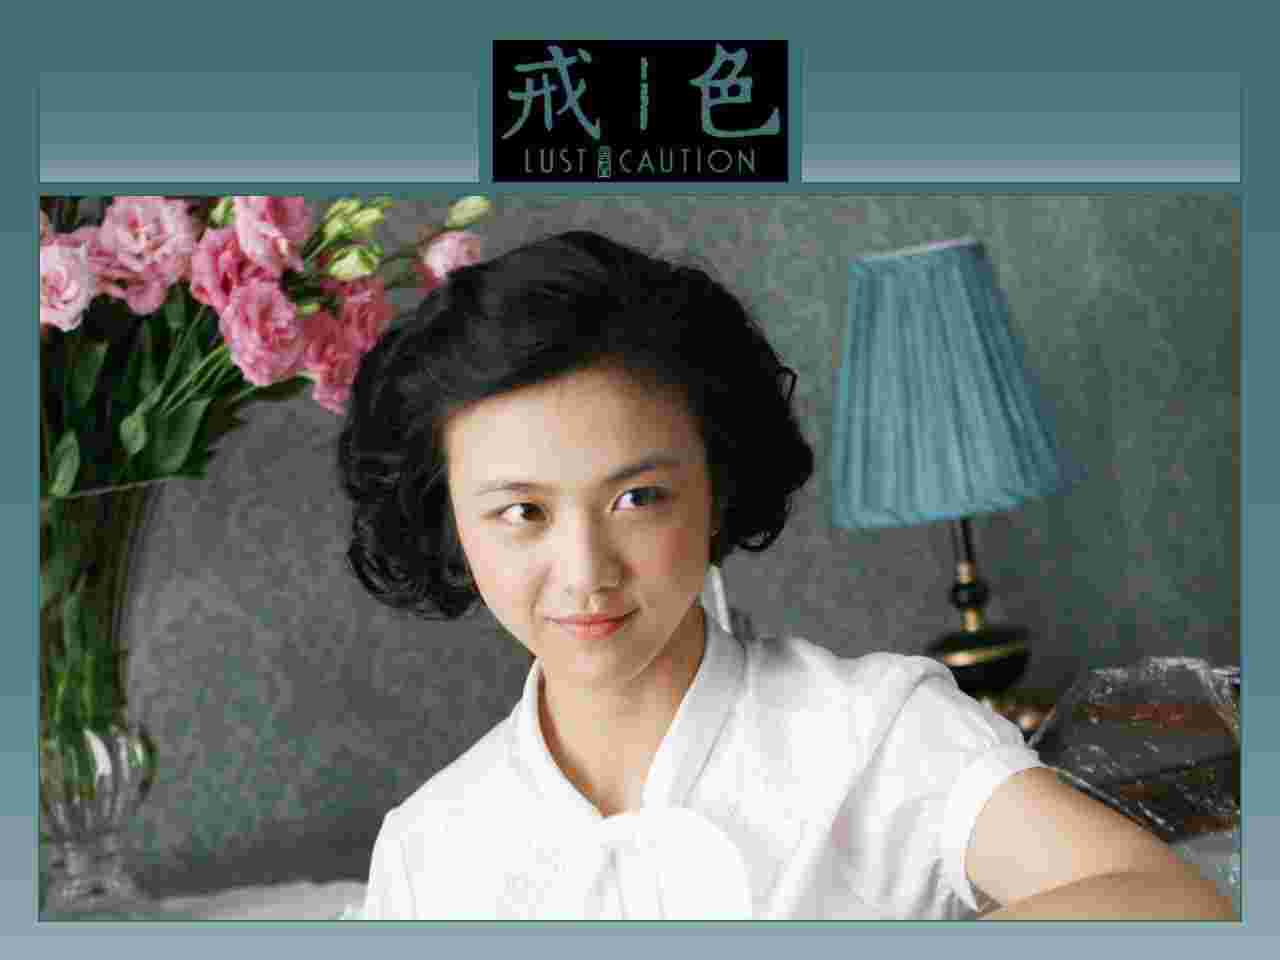 Free Download Lust Caution Wallpaper 1280 333938 Wallpaper Se Jie Lust Caution [1280x960] For